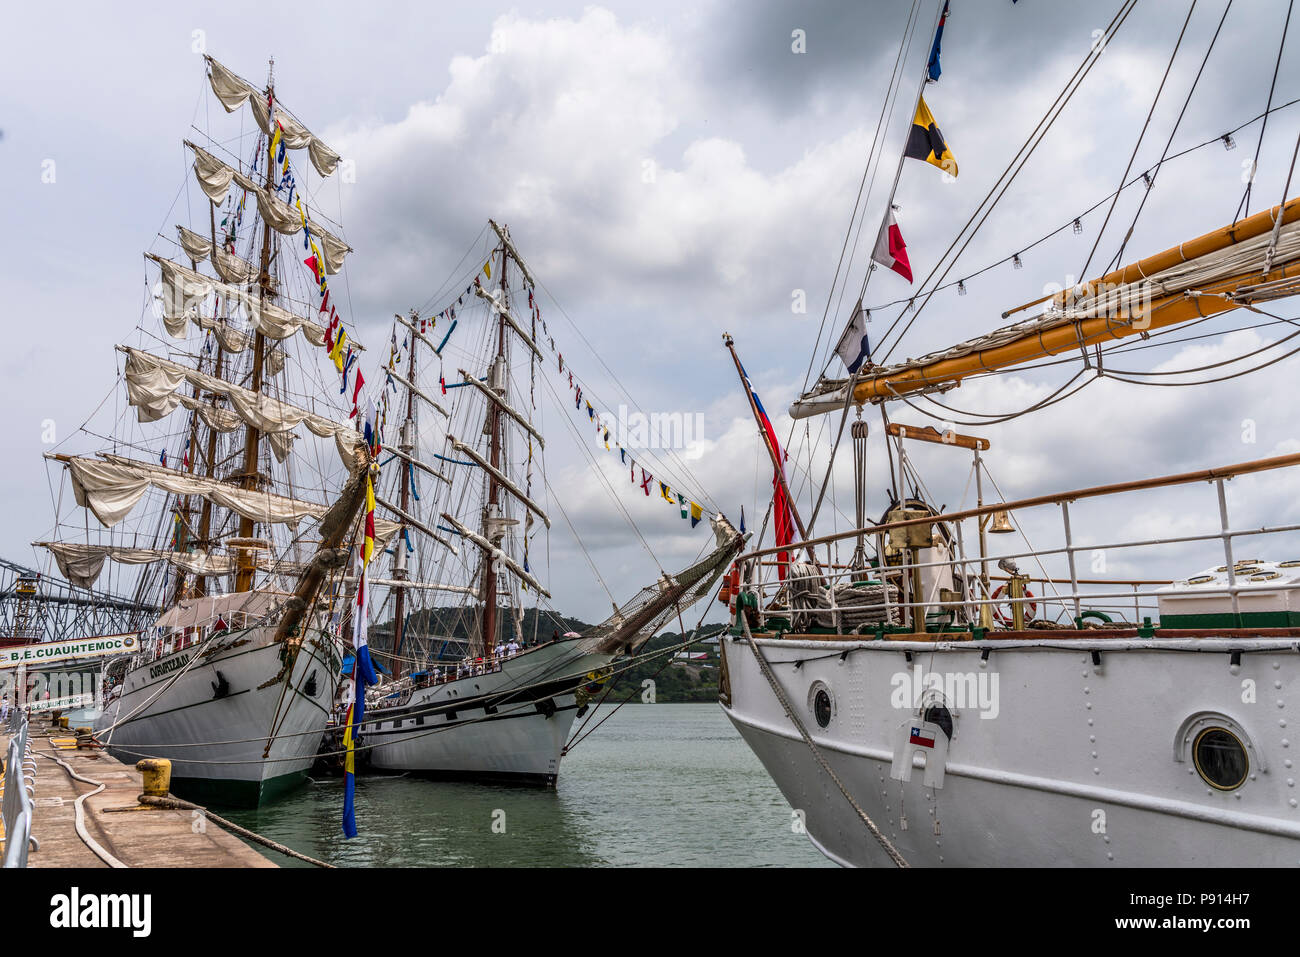 Sailing School Vessels in Panama Balboa Port at Velas Latinoamerica 2018 regata Stock Photo